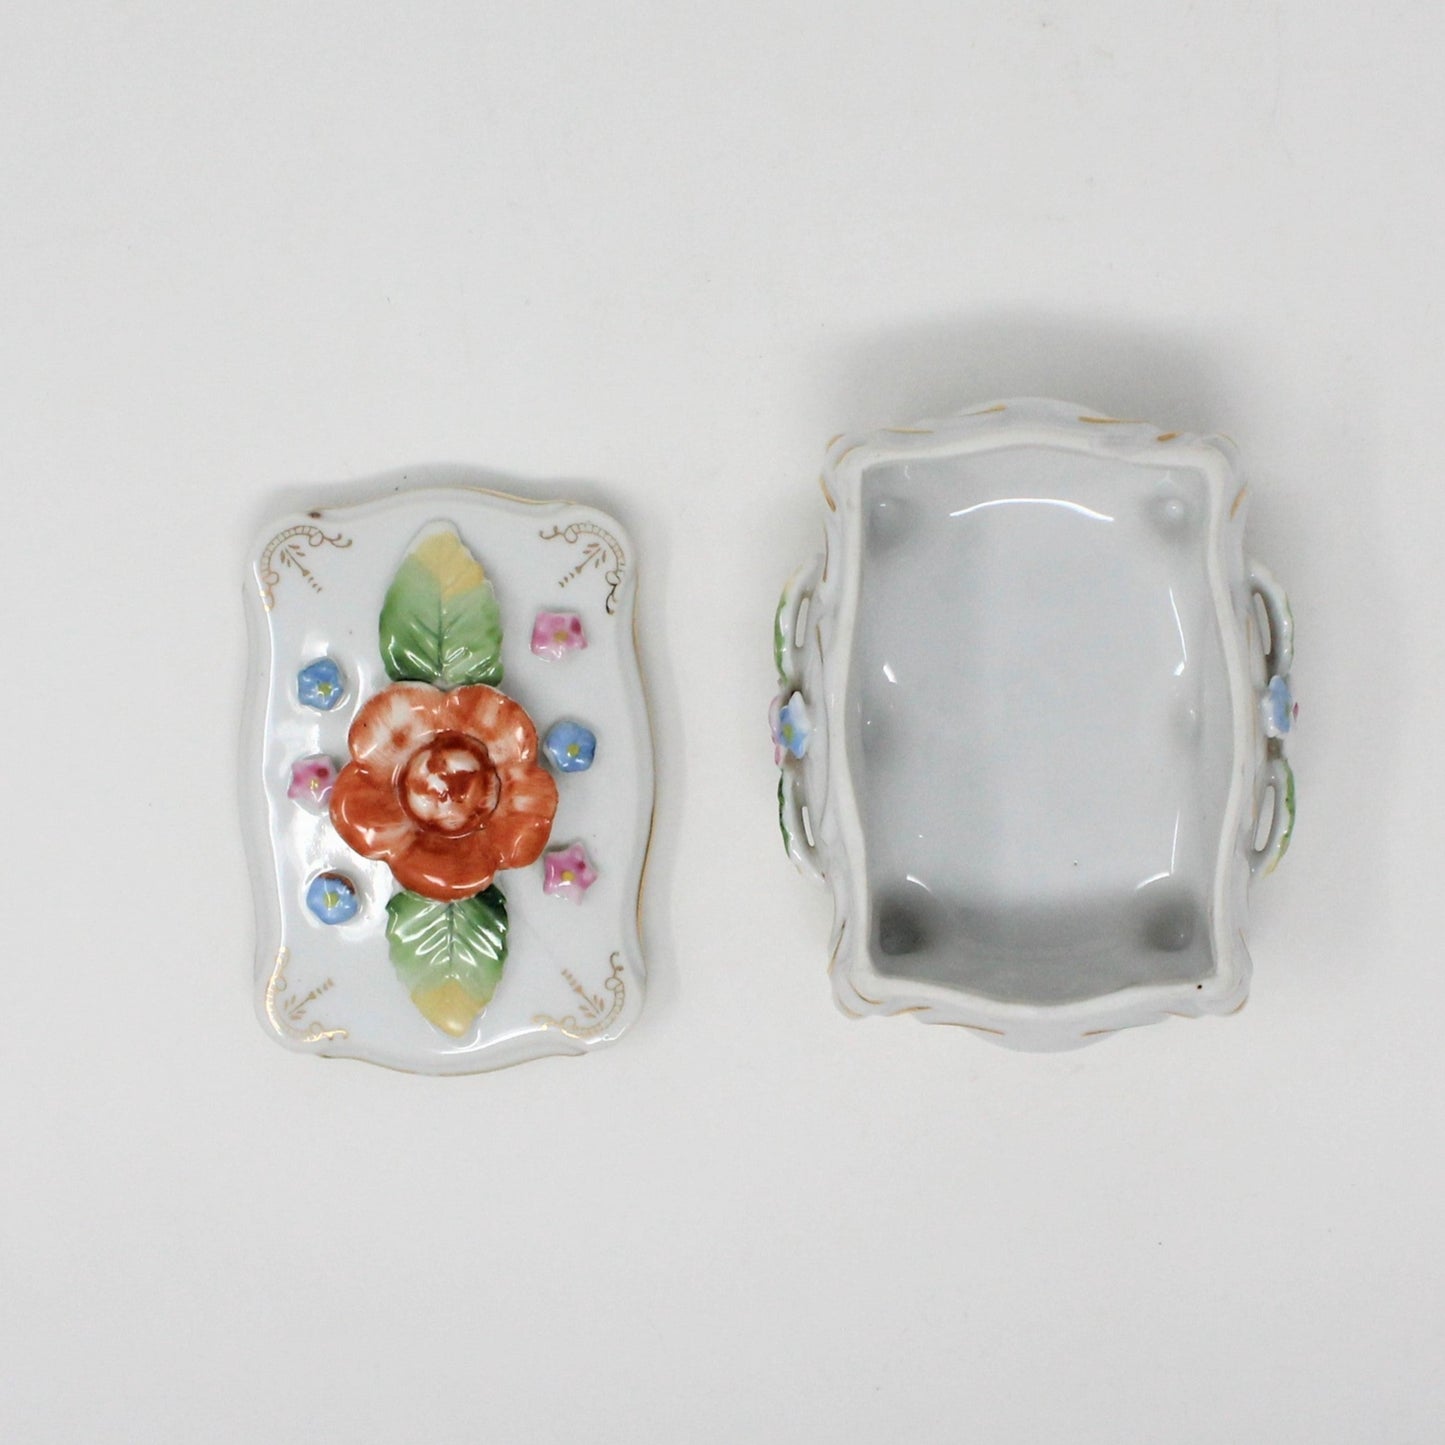 Trinket Box, TT Takito, Hand Painted Rose, Japan Porcelain, Vintage